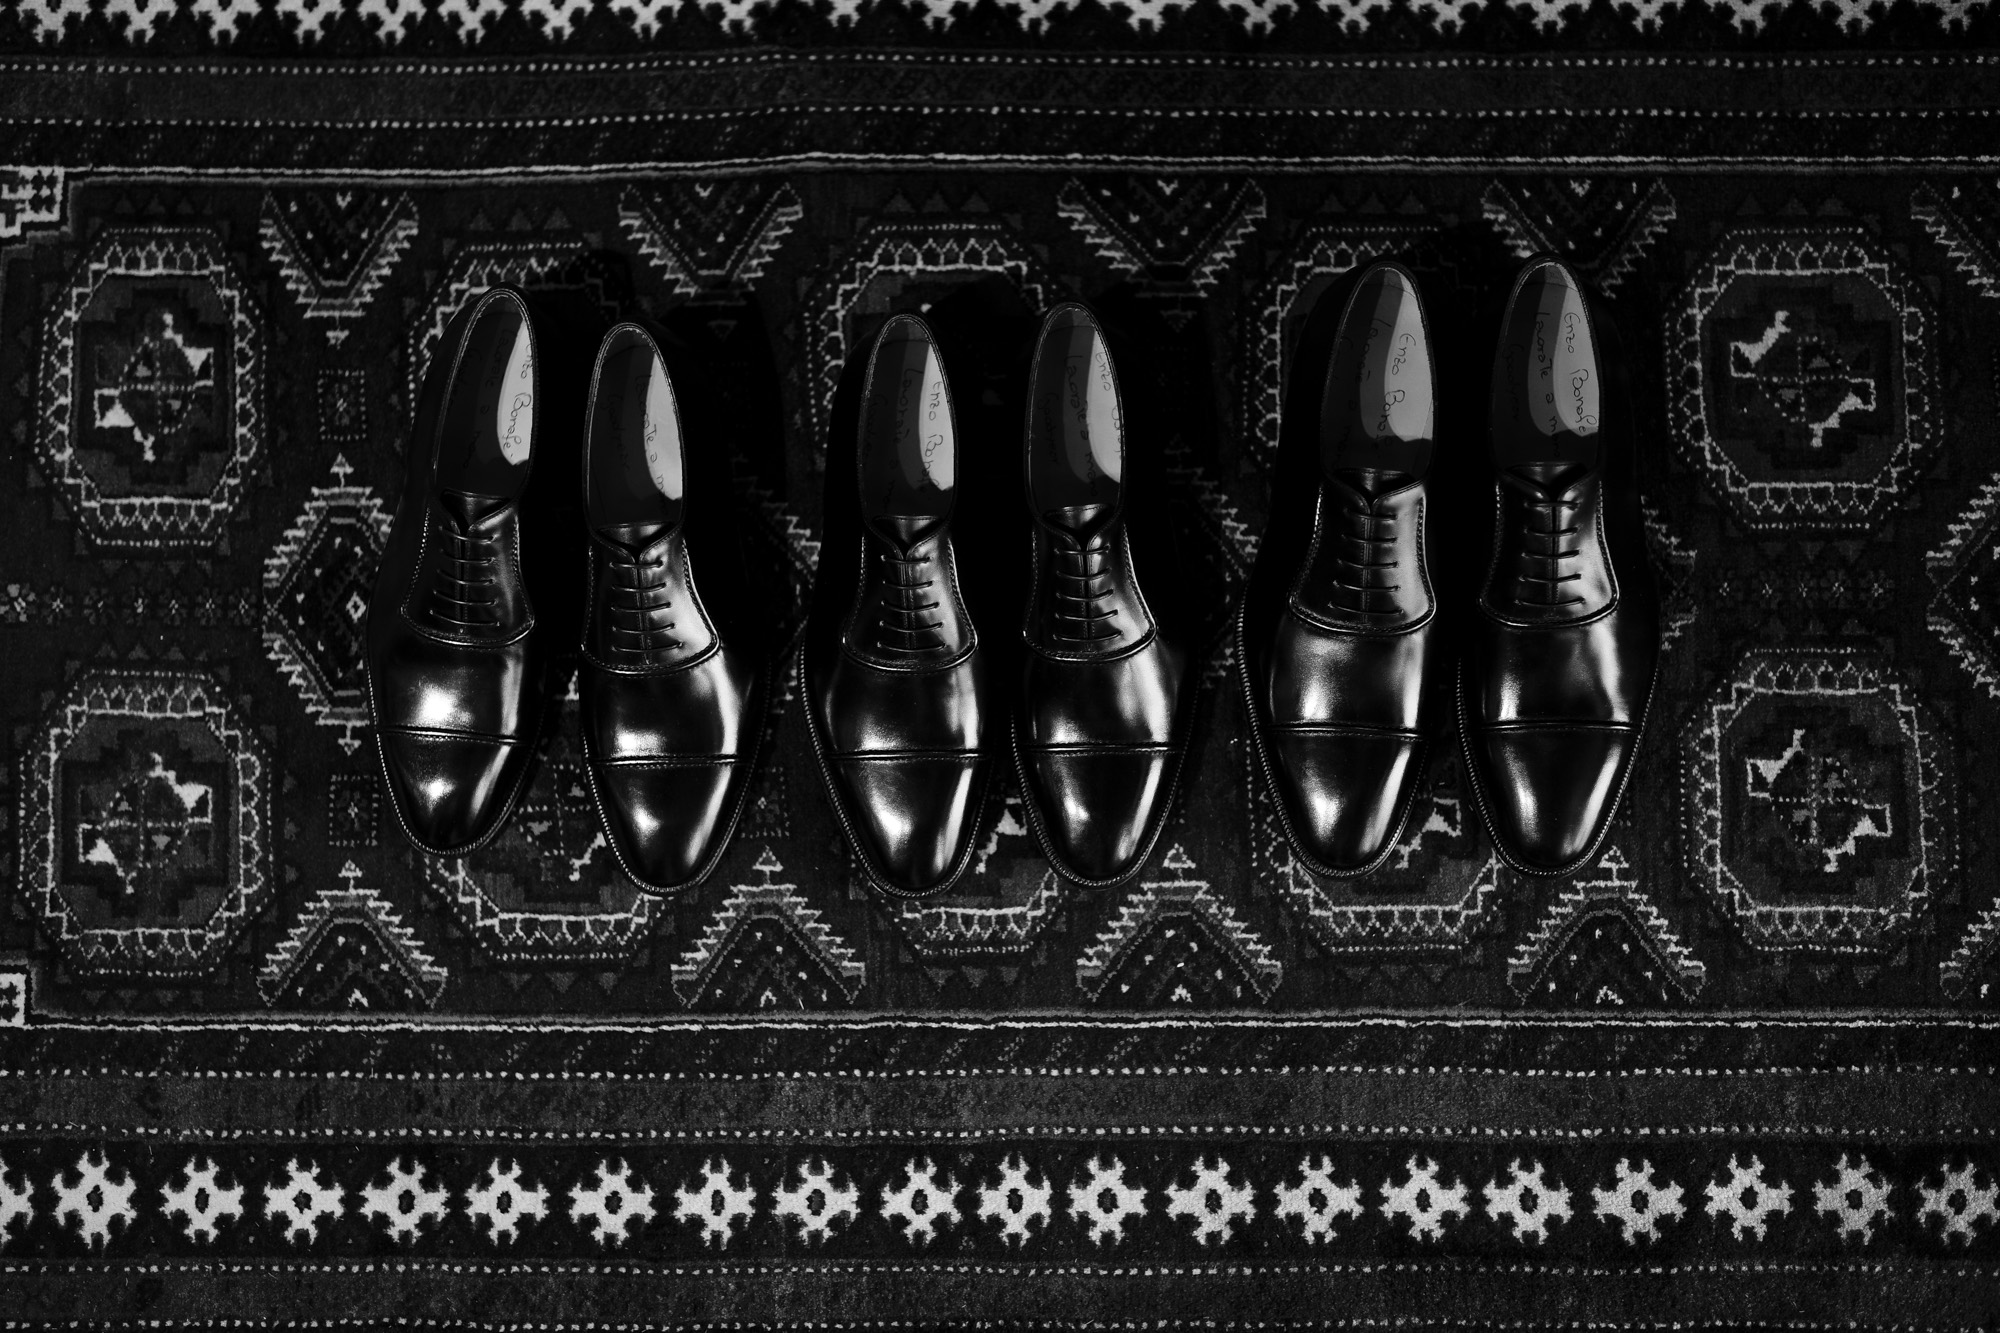 ENZO BONAFE (エンツォボナフェ) ART.3998 mod Straight Tip Shoes Du Puy Vitello デュプイ社ボックスカーフ ストレートチップシューズ NERO (ブラック) made in italy (イタリア製) 2020 春夏新作 【Special Model】【Alto e Diritto 別注】 愛知 名古屋 enzobonafe エンツォボナフェ